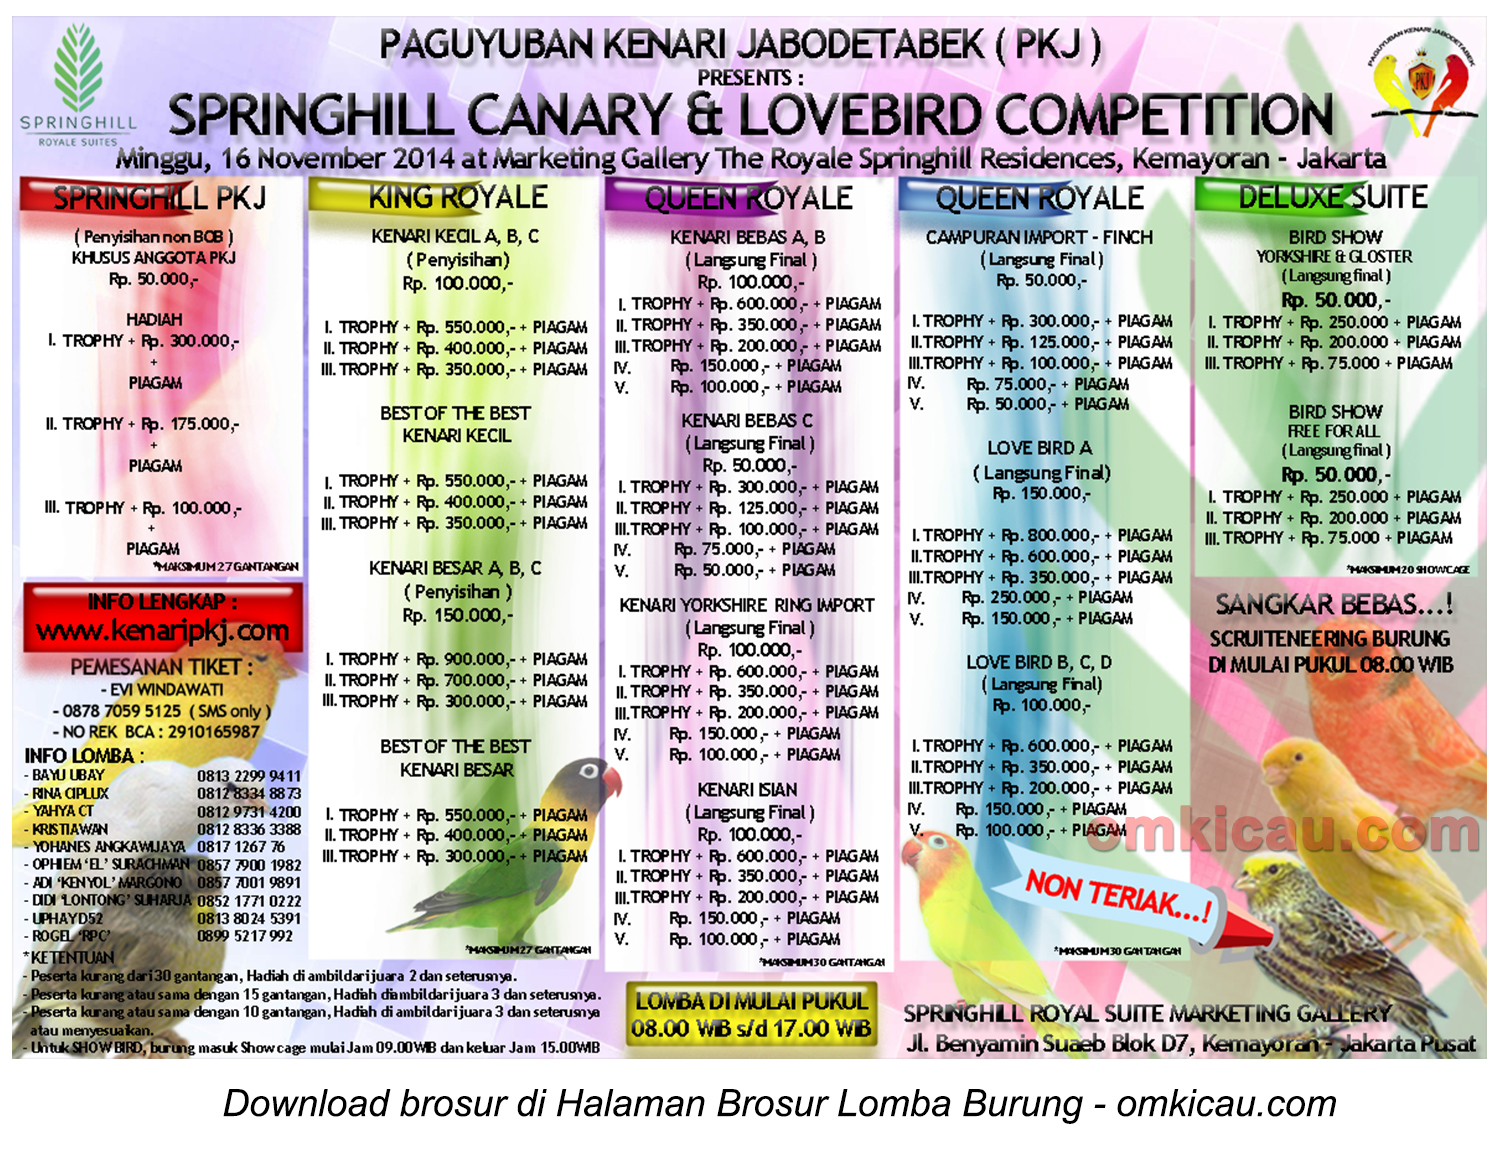 Brosur Springhill Canary & Lovebird Competition, Jakarta, 16 November 2014